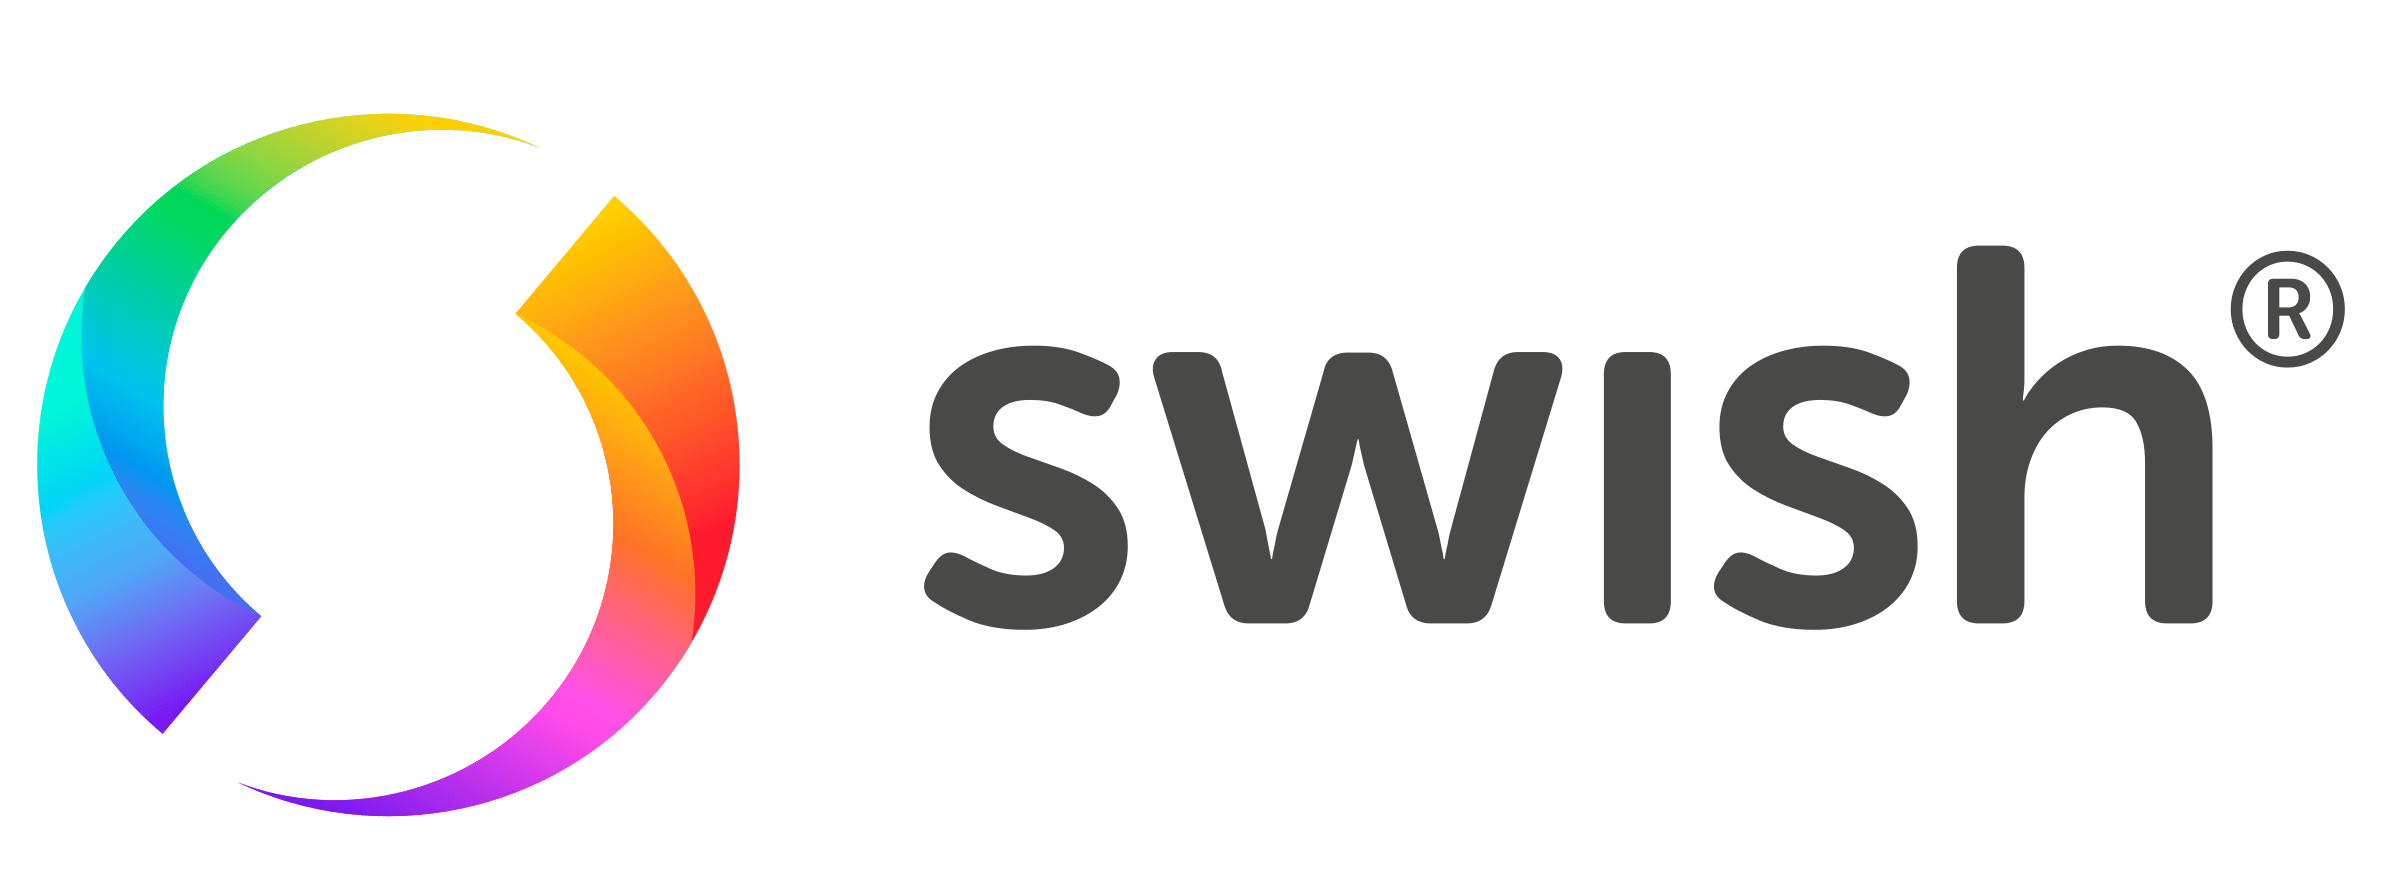 swish logo